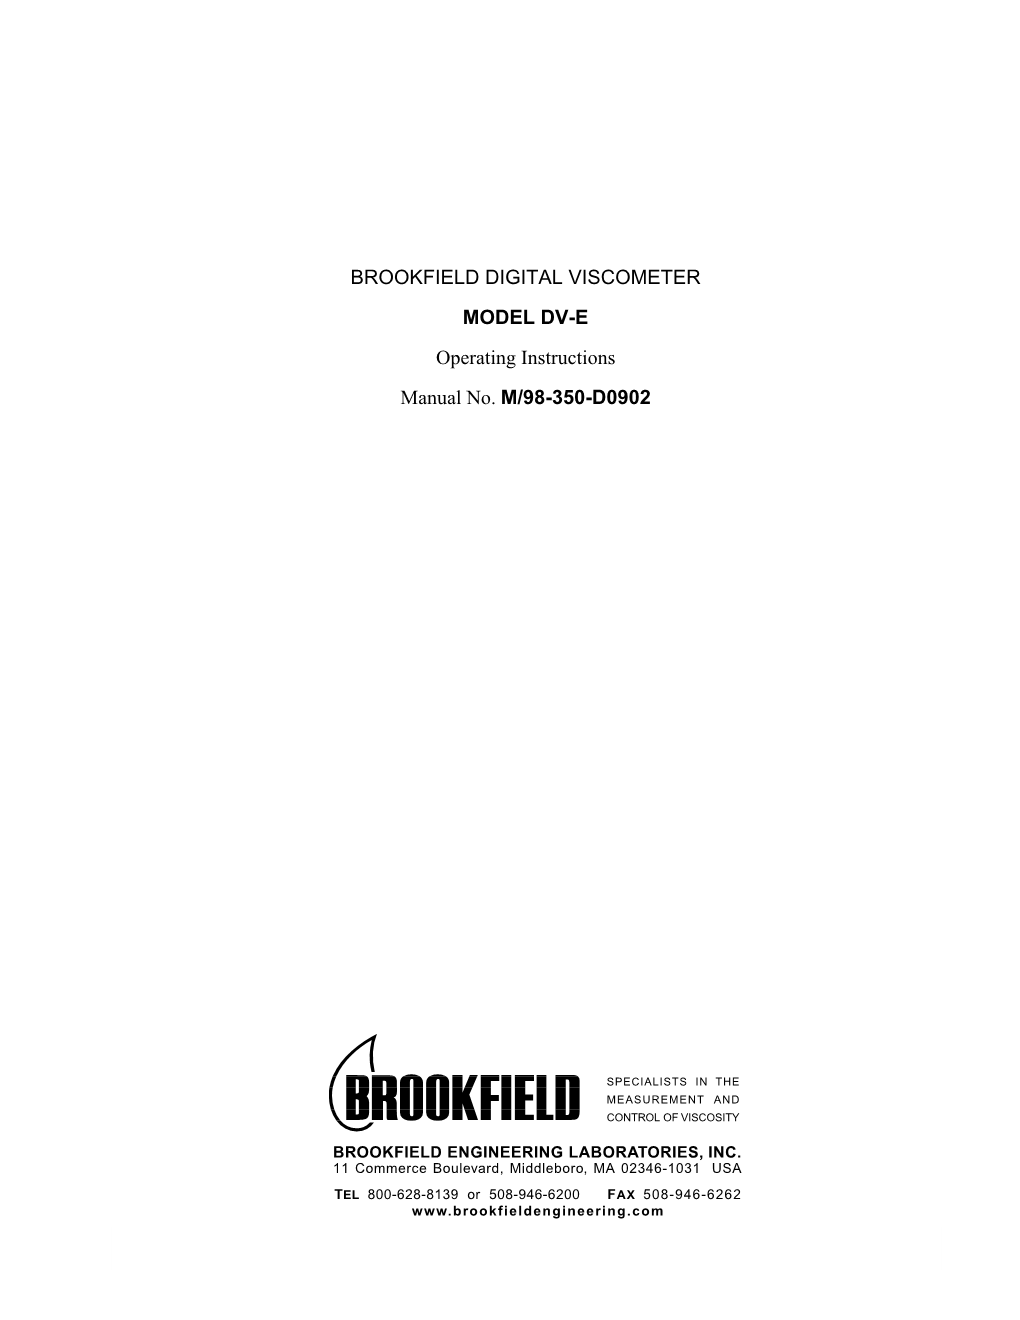 BROOKFIELD DIGITAL VISCOMETER MODEL DV-E Operating